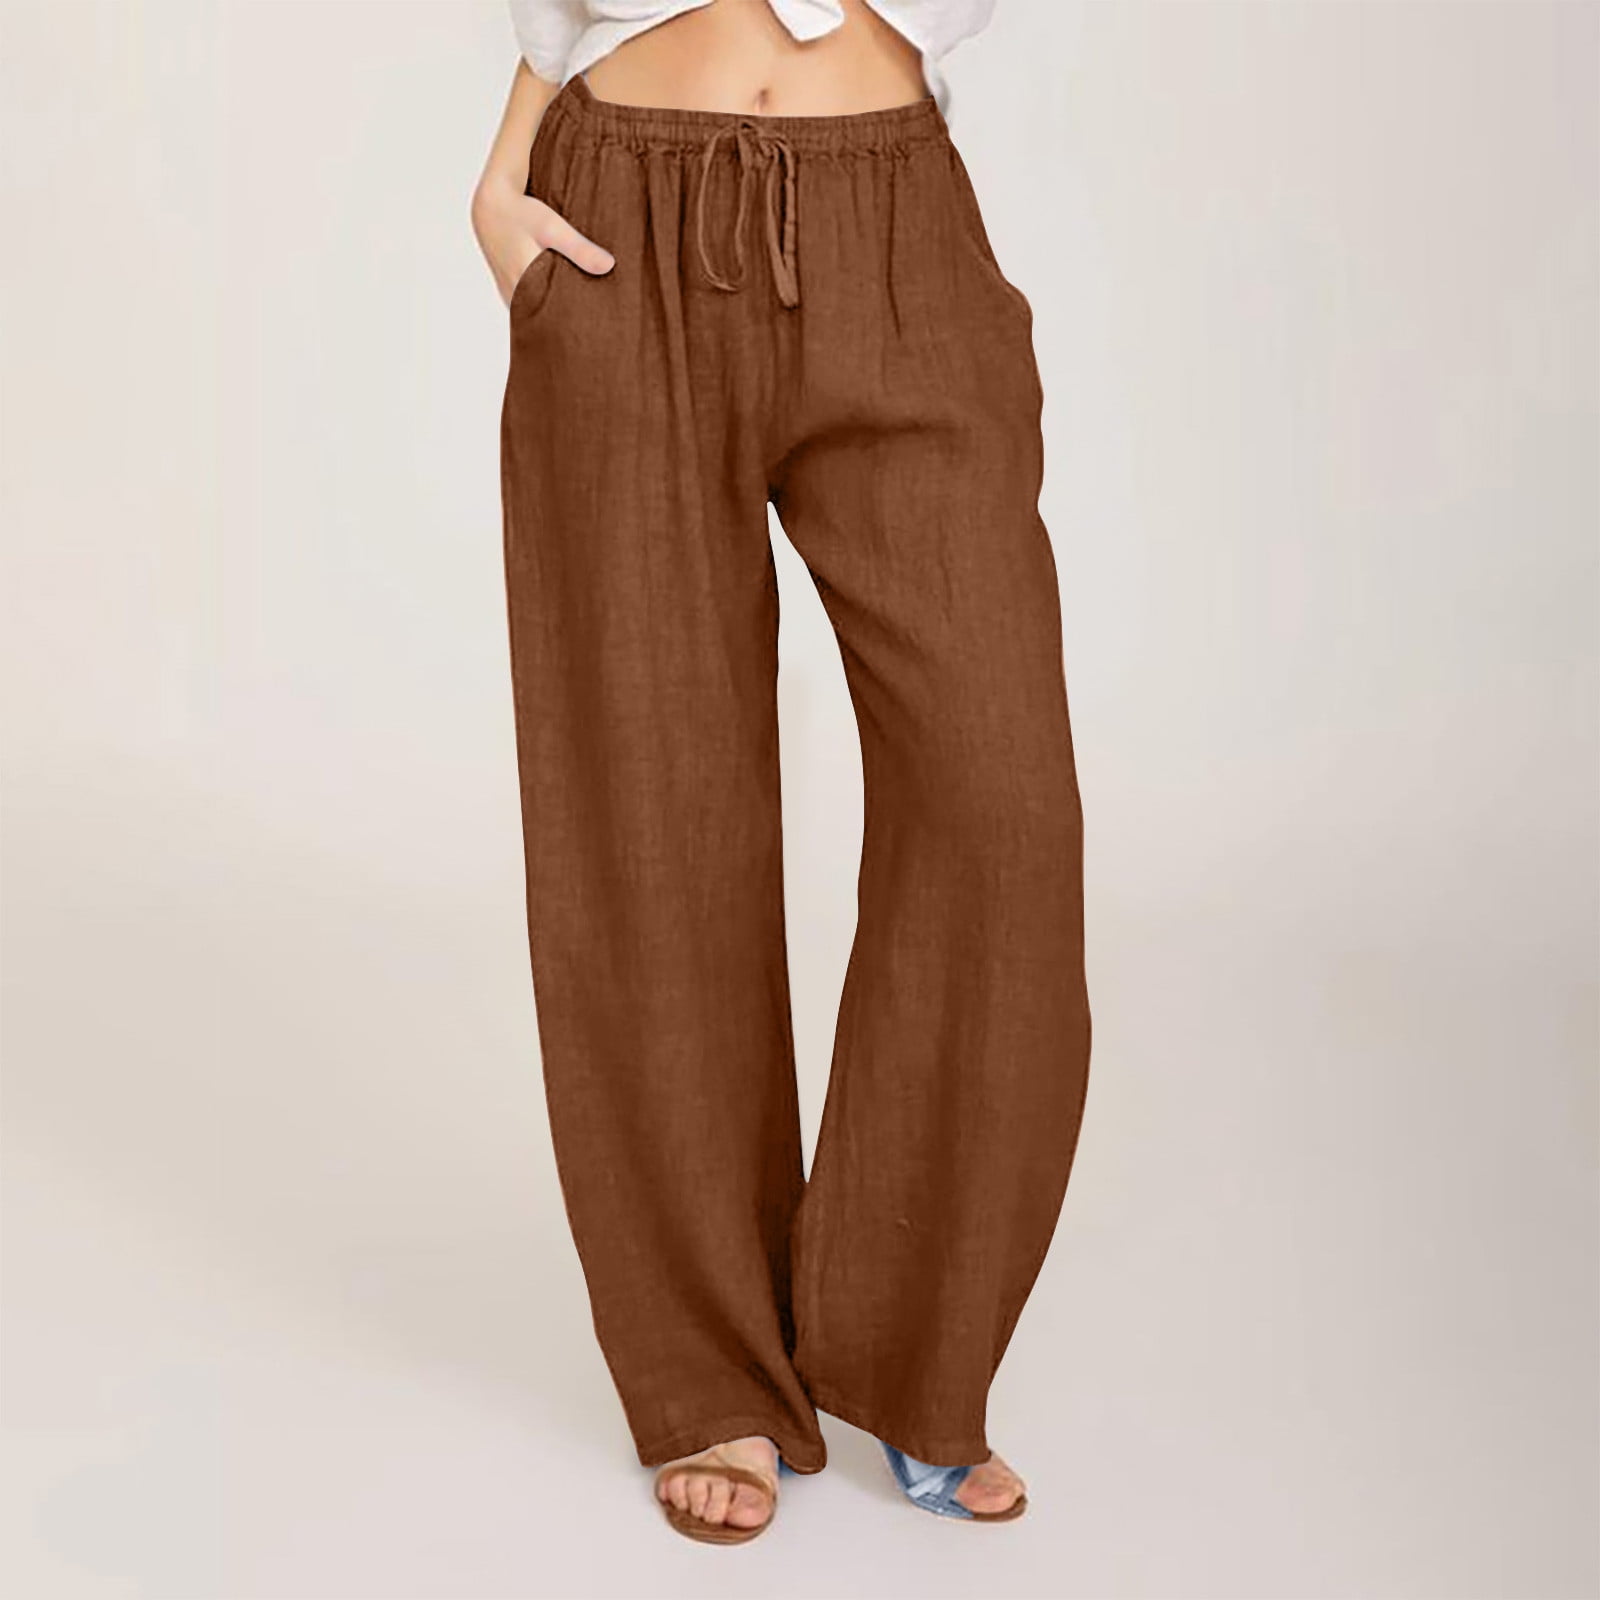 Soft Surroundings Womens Elastic Waist Brown Pants Size XL 36X28